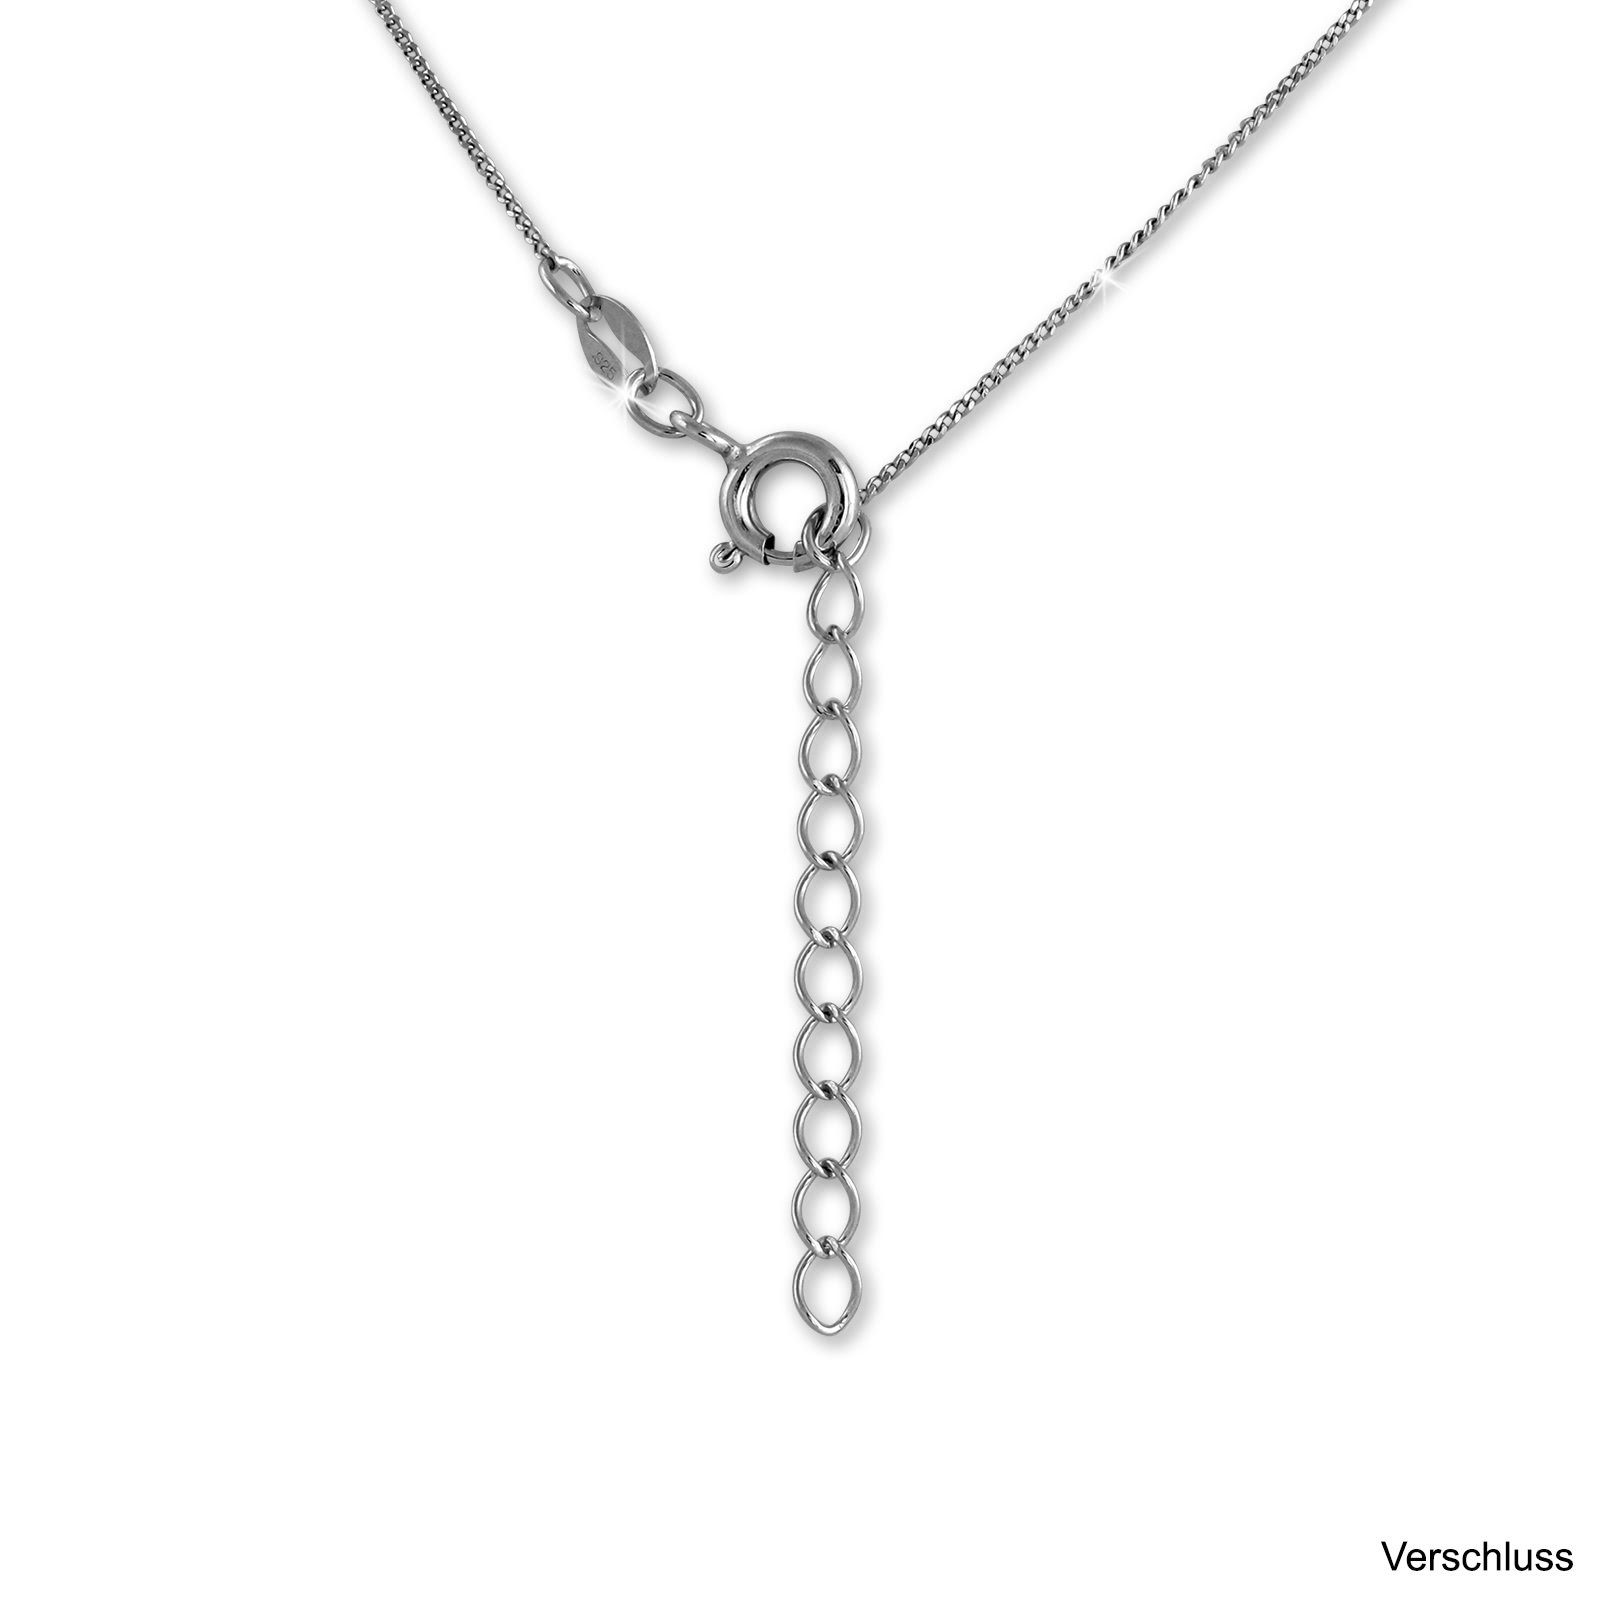 SilberDream Silberkette Herzen Halsketten Farbe: Silber, 44cm 925 Halskette 3cm, (Herzen) Sterling Silber, SilberDream ca. 925 + silber